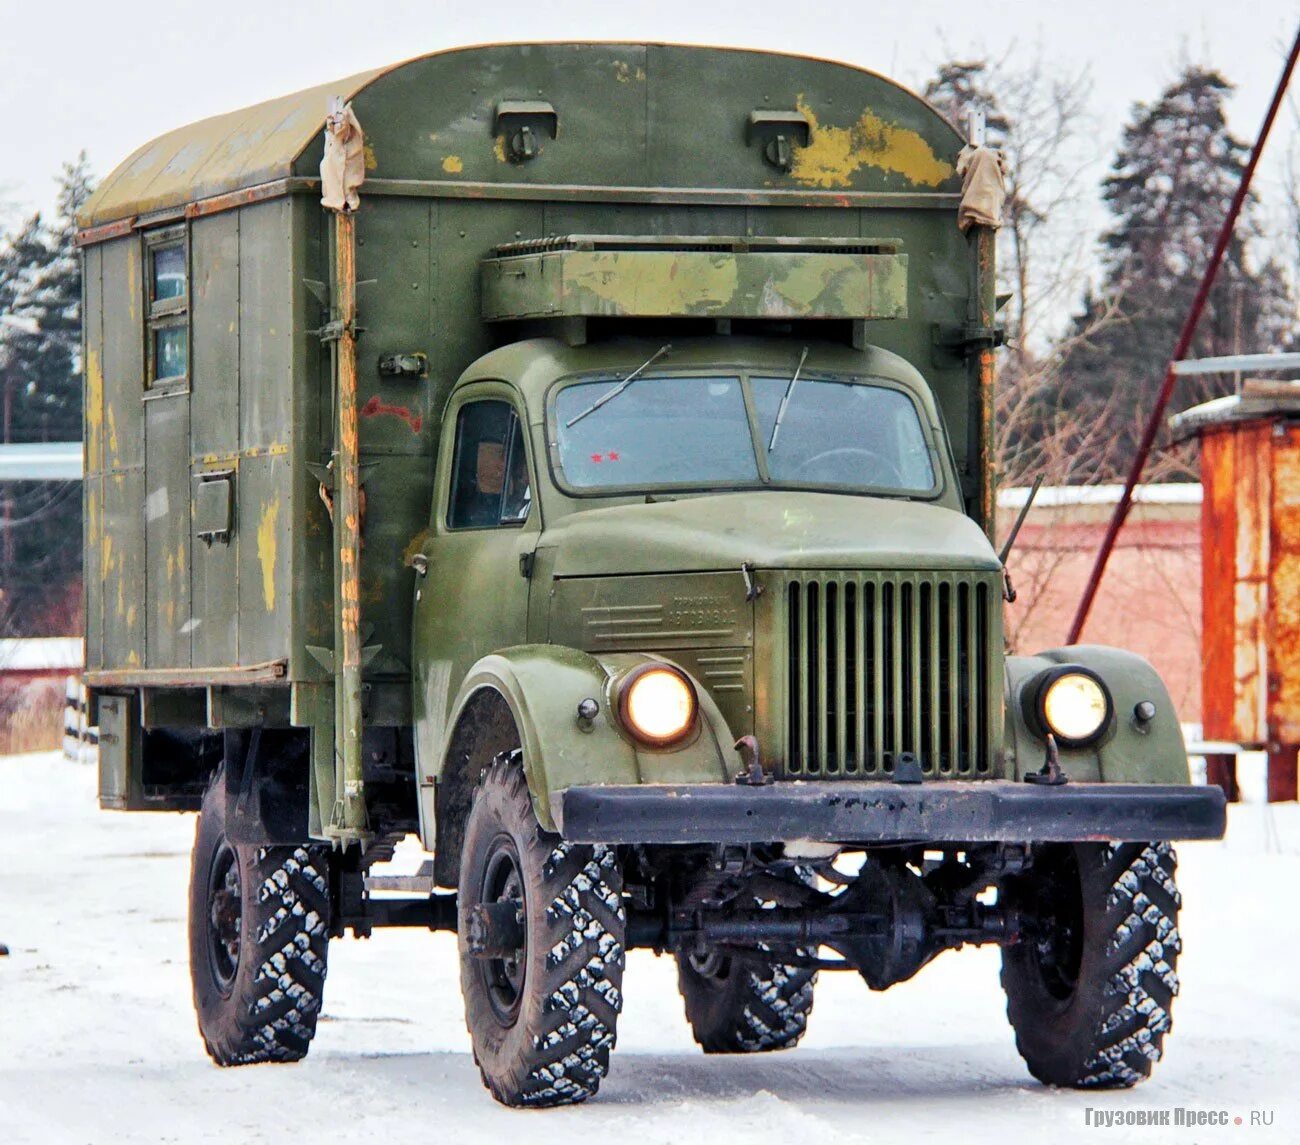 Теста грузовик. ГАЗ-63 грузовой. Машина ГАЗ 63. ГАЗ 63 тягач. ГАЗ 66 КШМ.